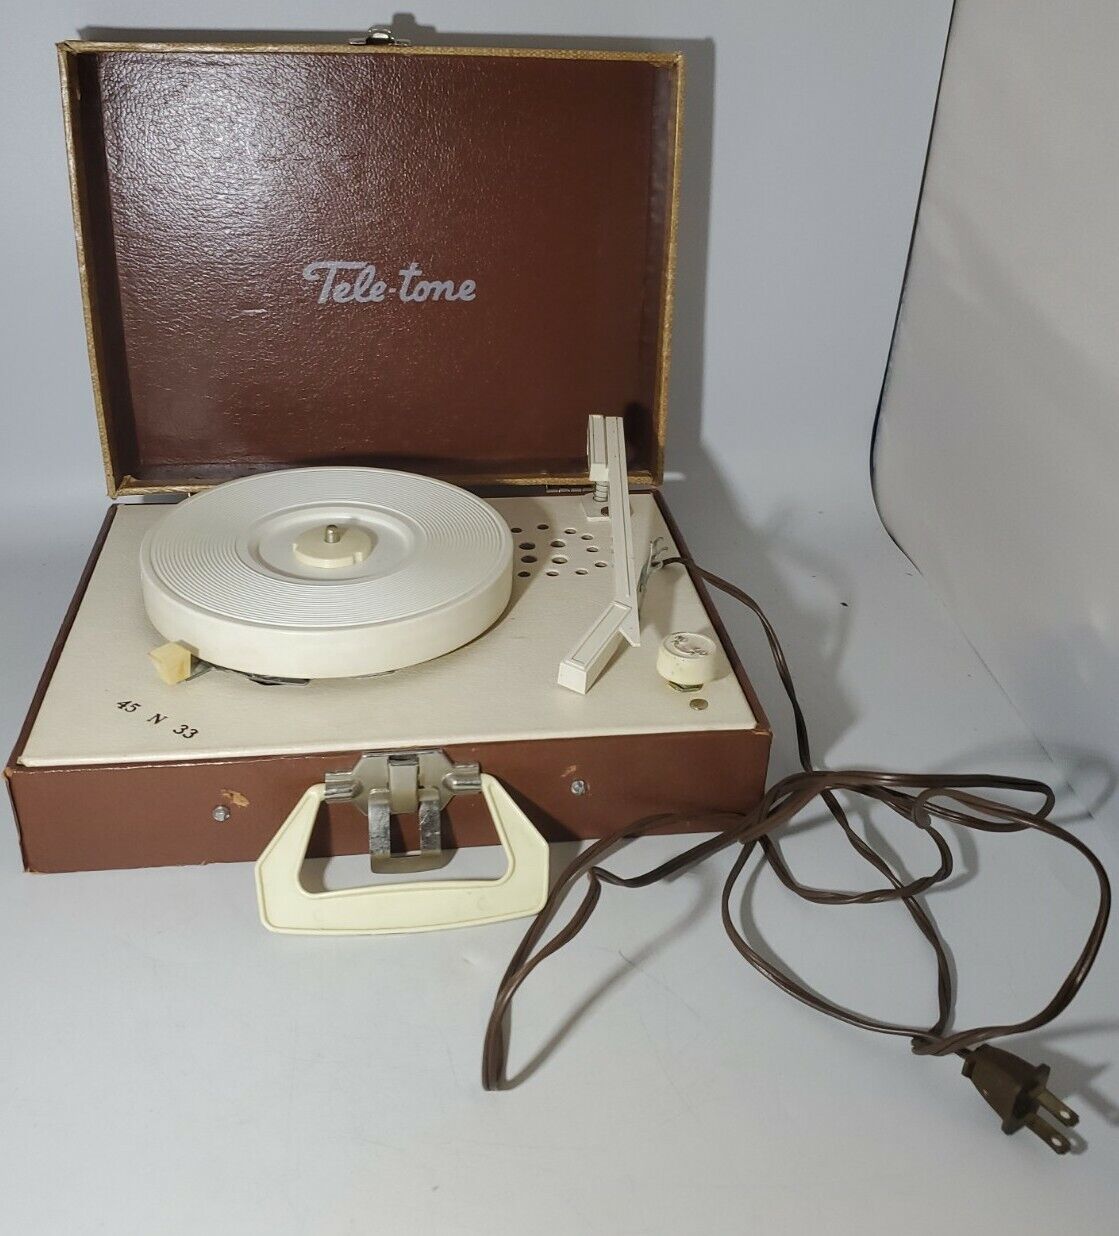 Tele Tone Rare Vintage Suitcase Record Player